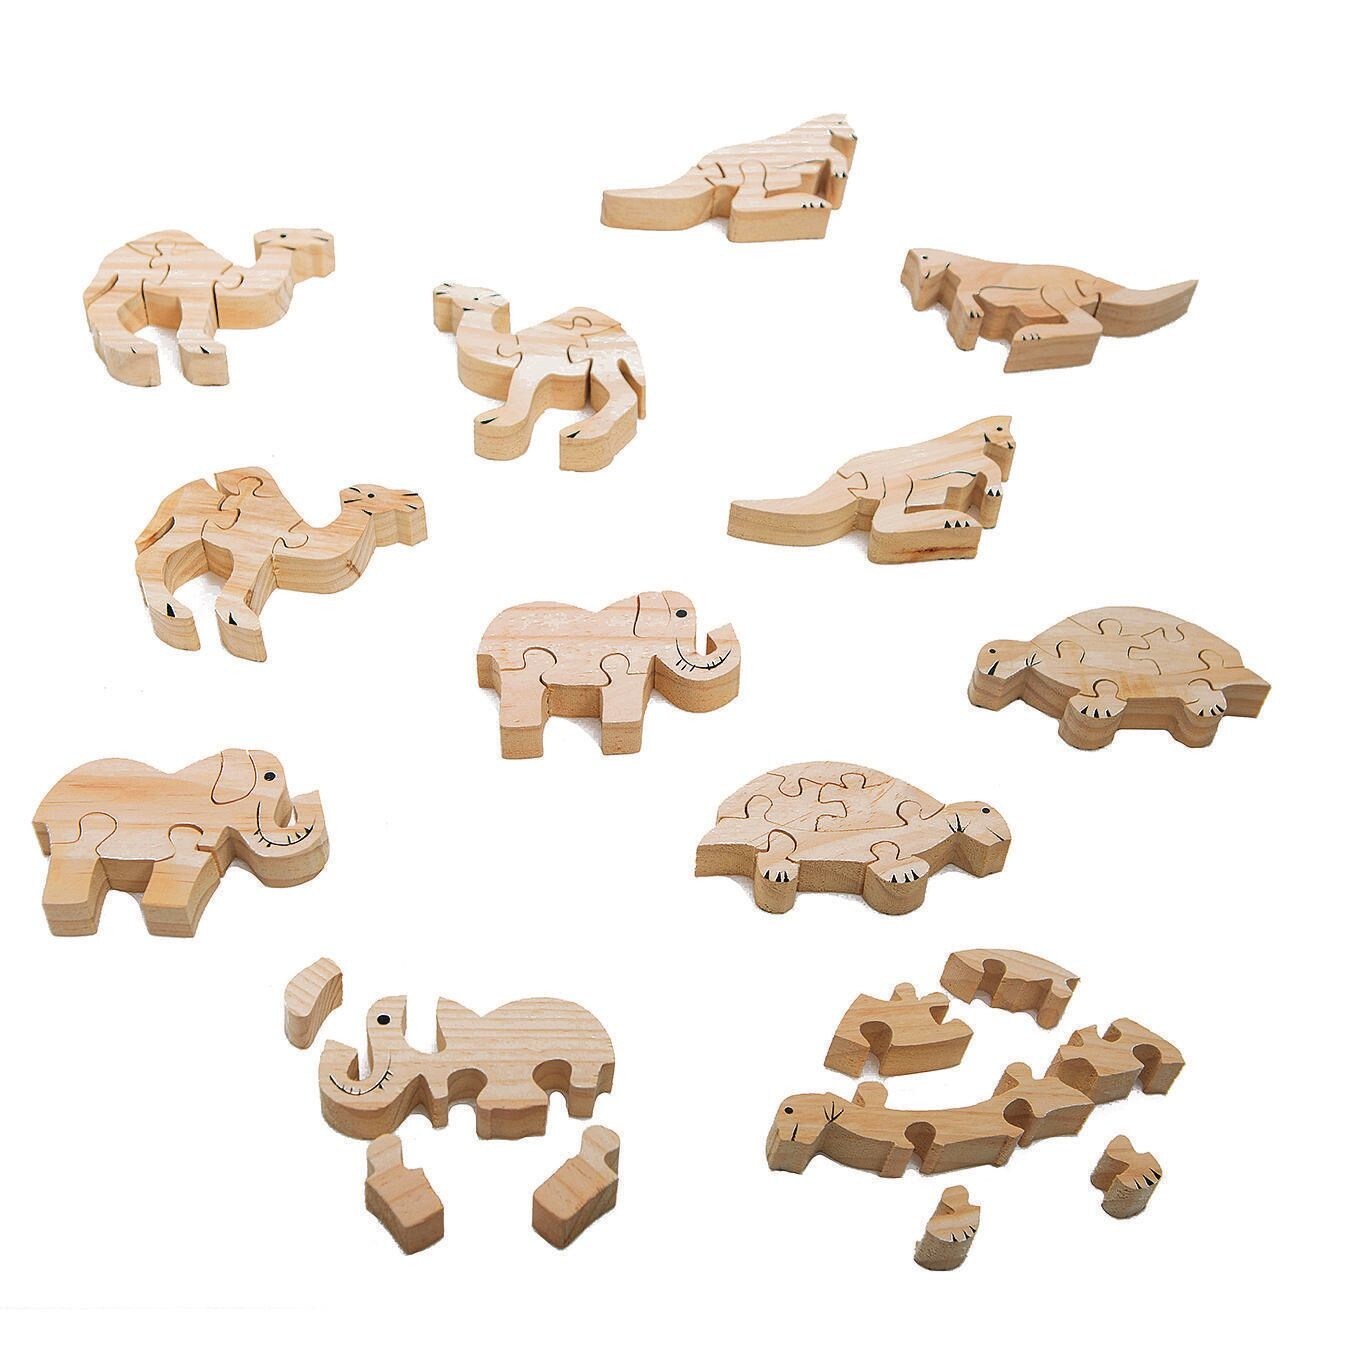 Wooden Toys  Wooden animal toys, Wooden animals, Wood animal